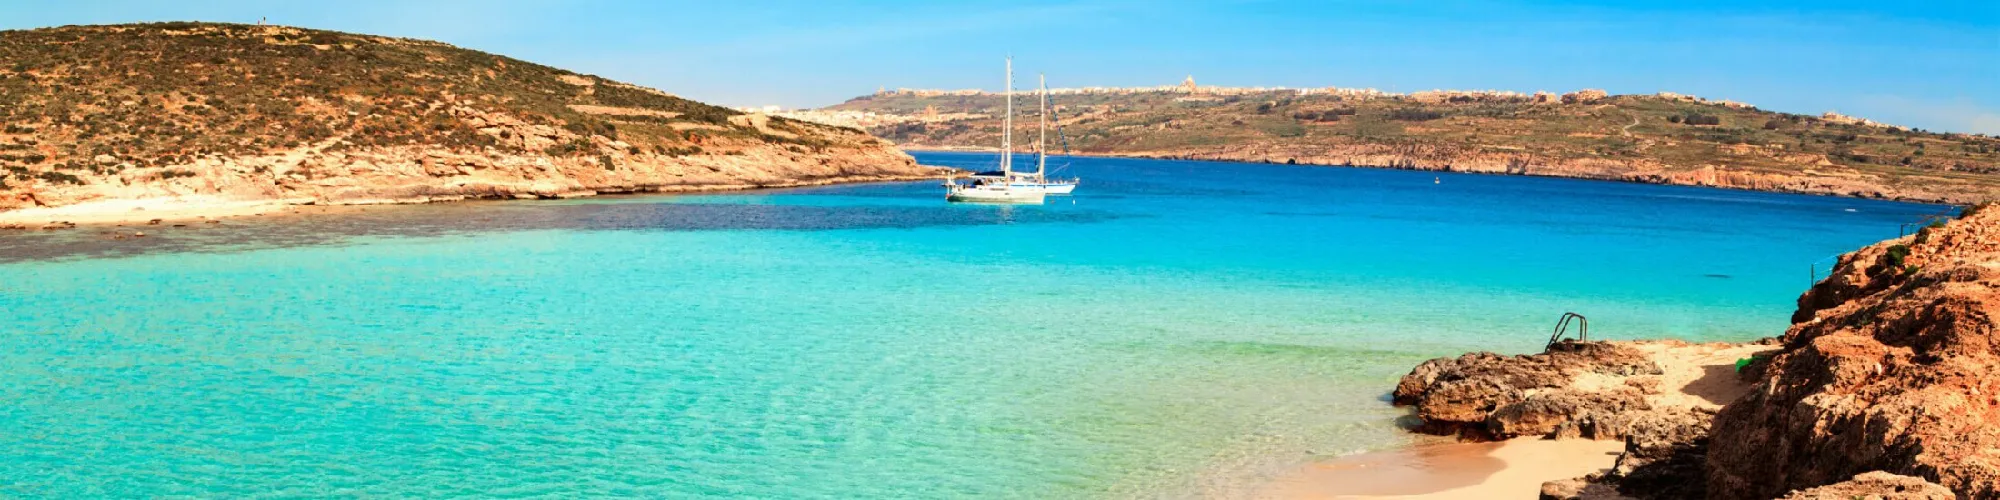 Urlaub auf Malta & Gozo background image